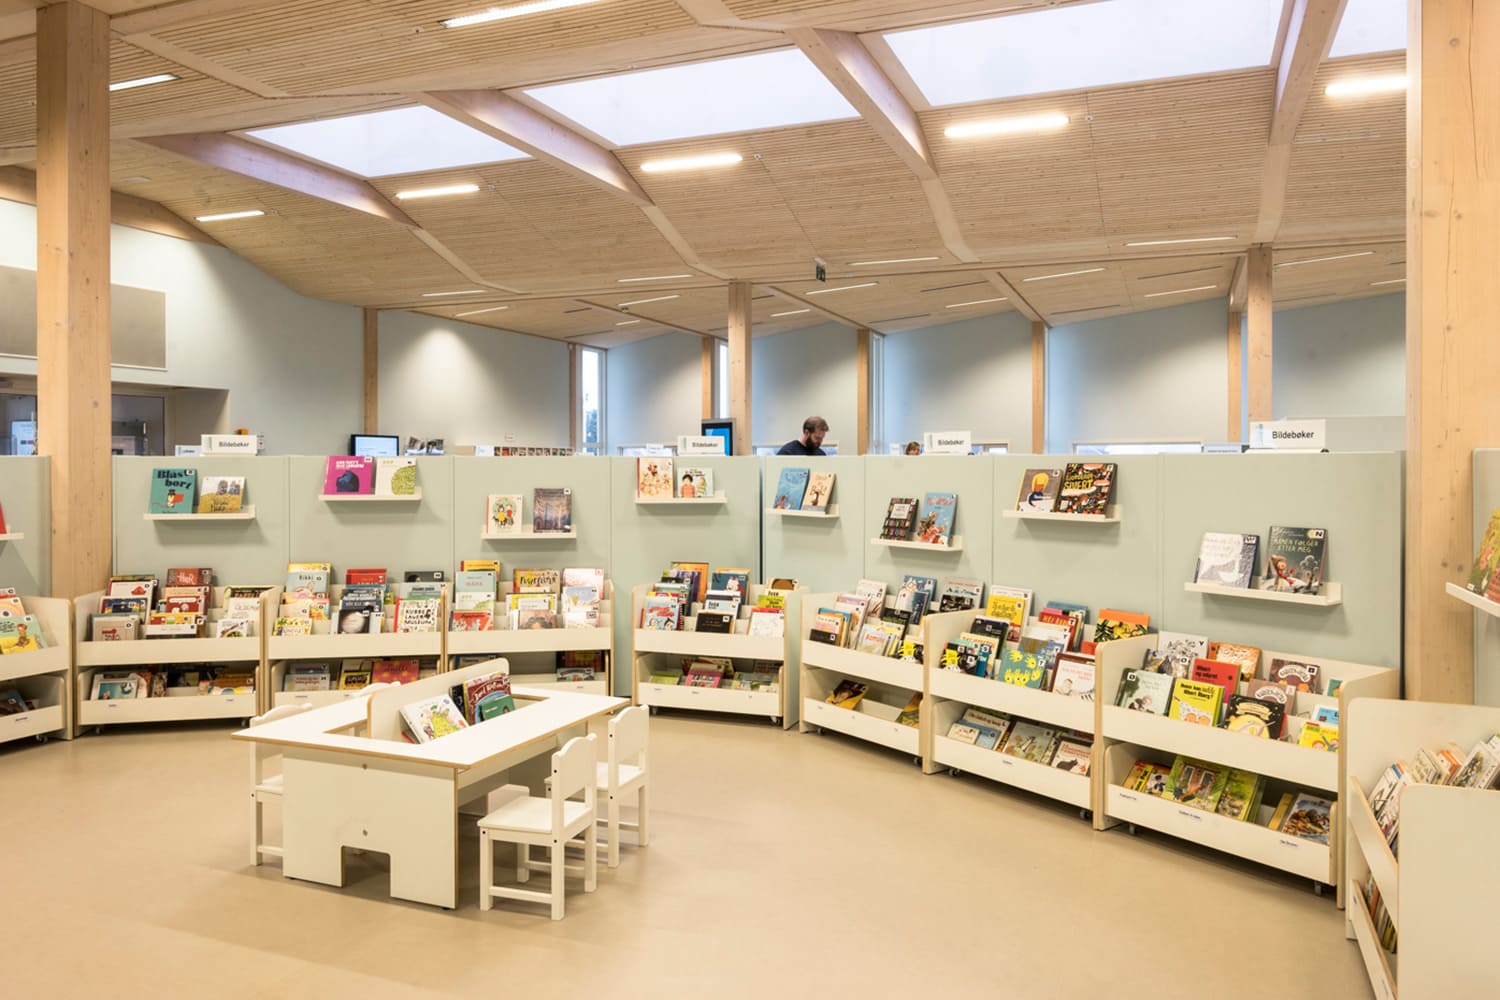 Grimstad Library